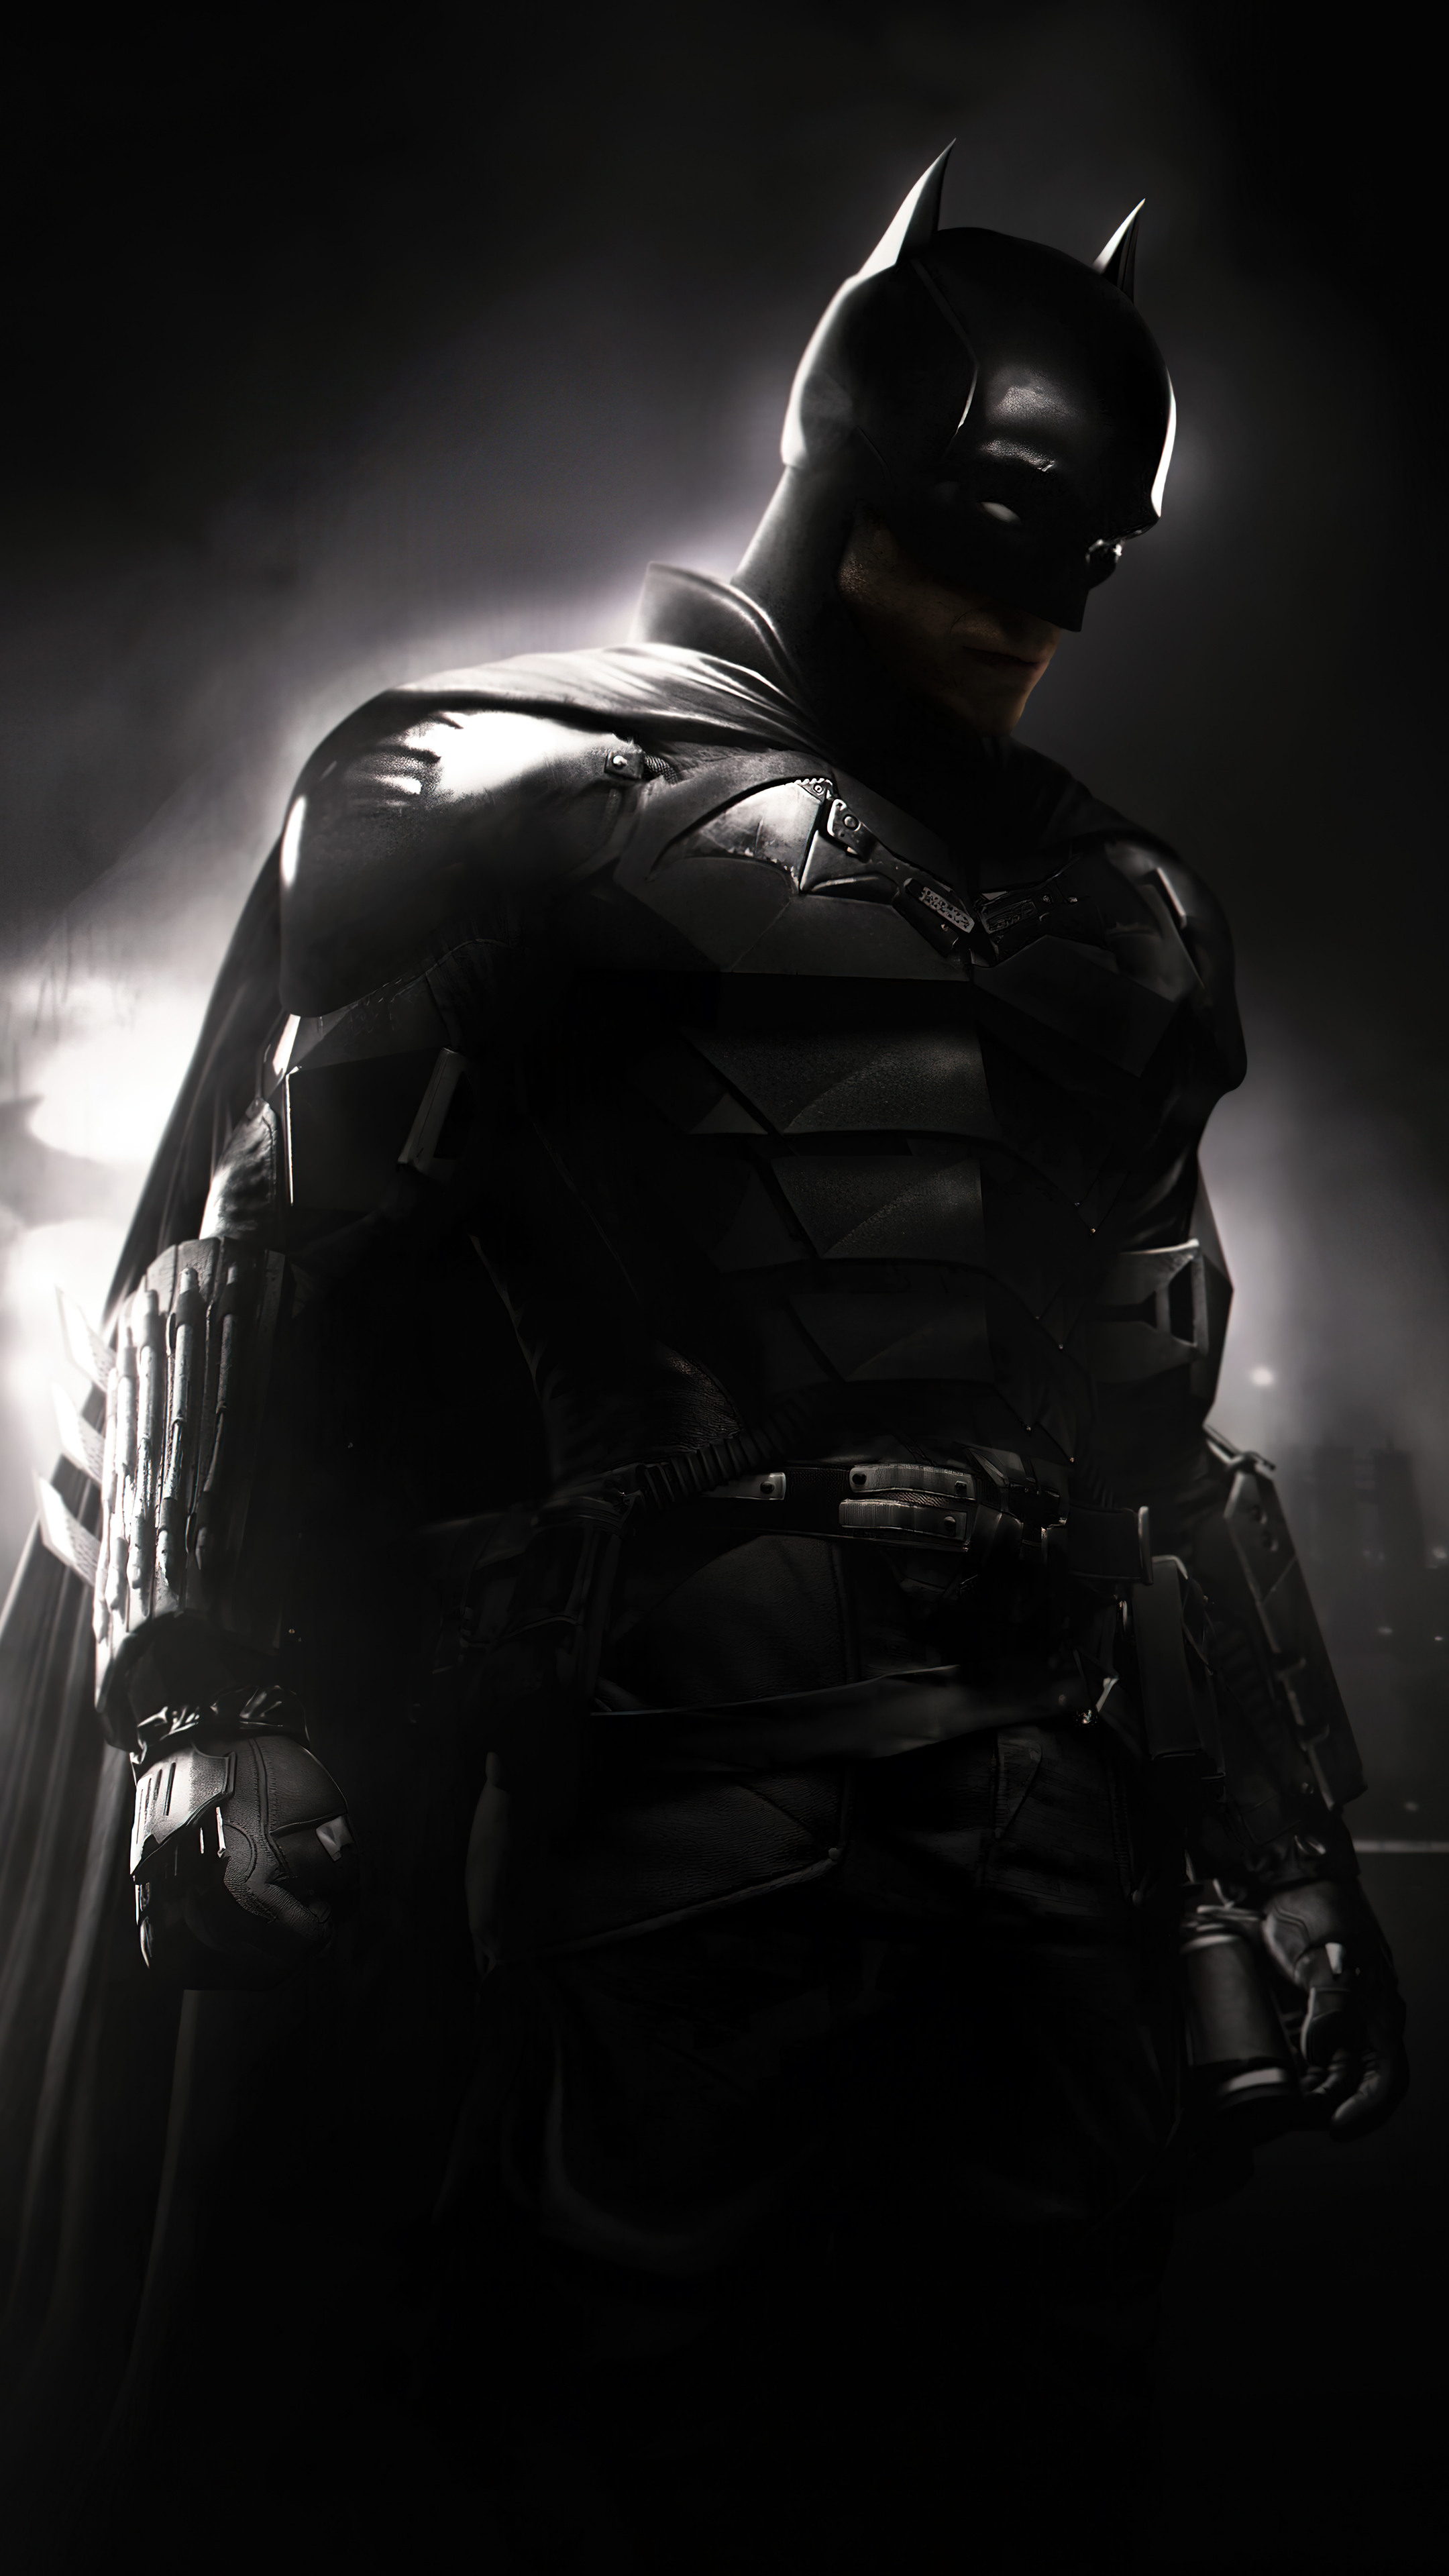 The Batman Movie Phone iPhone 4K Wallpaper free Download